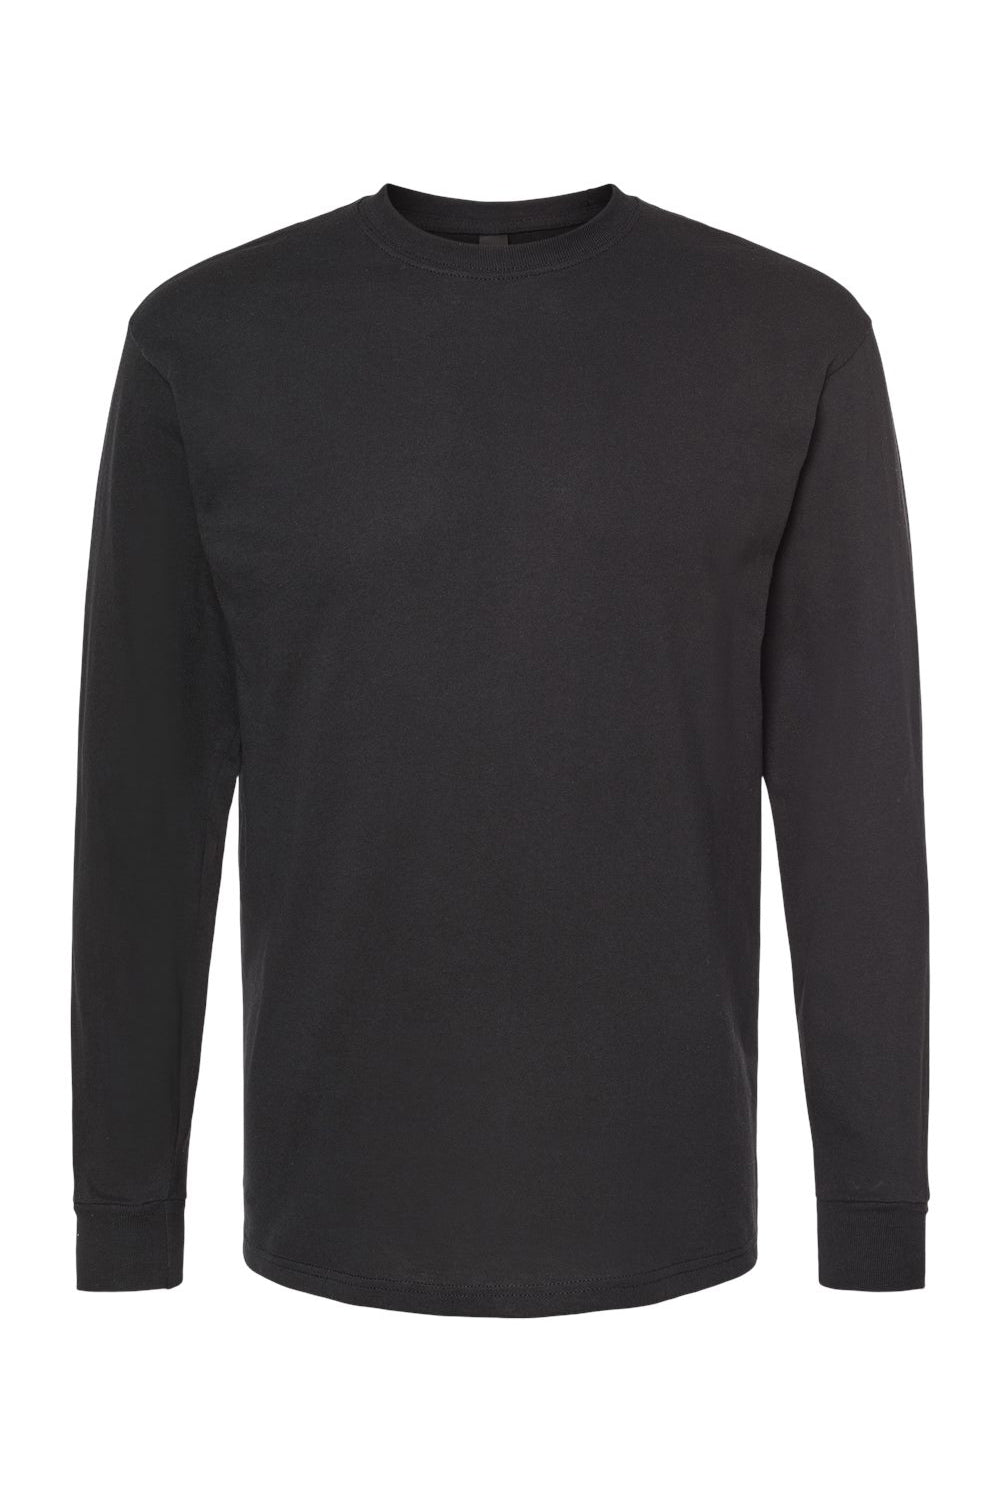 M&O 4820 Mens Gold Soft Touch Long Sleeve Crewneck T-Shirt Black Flat Front